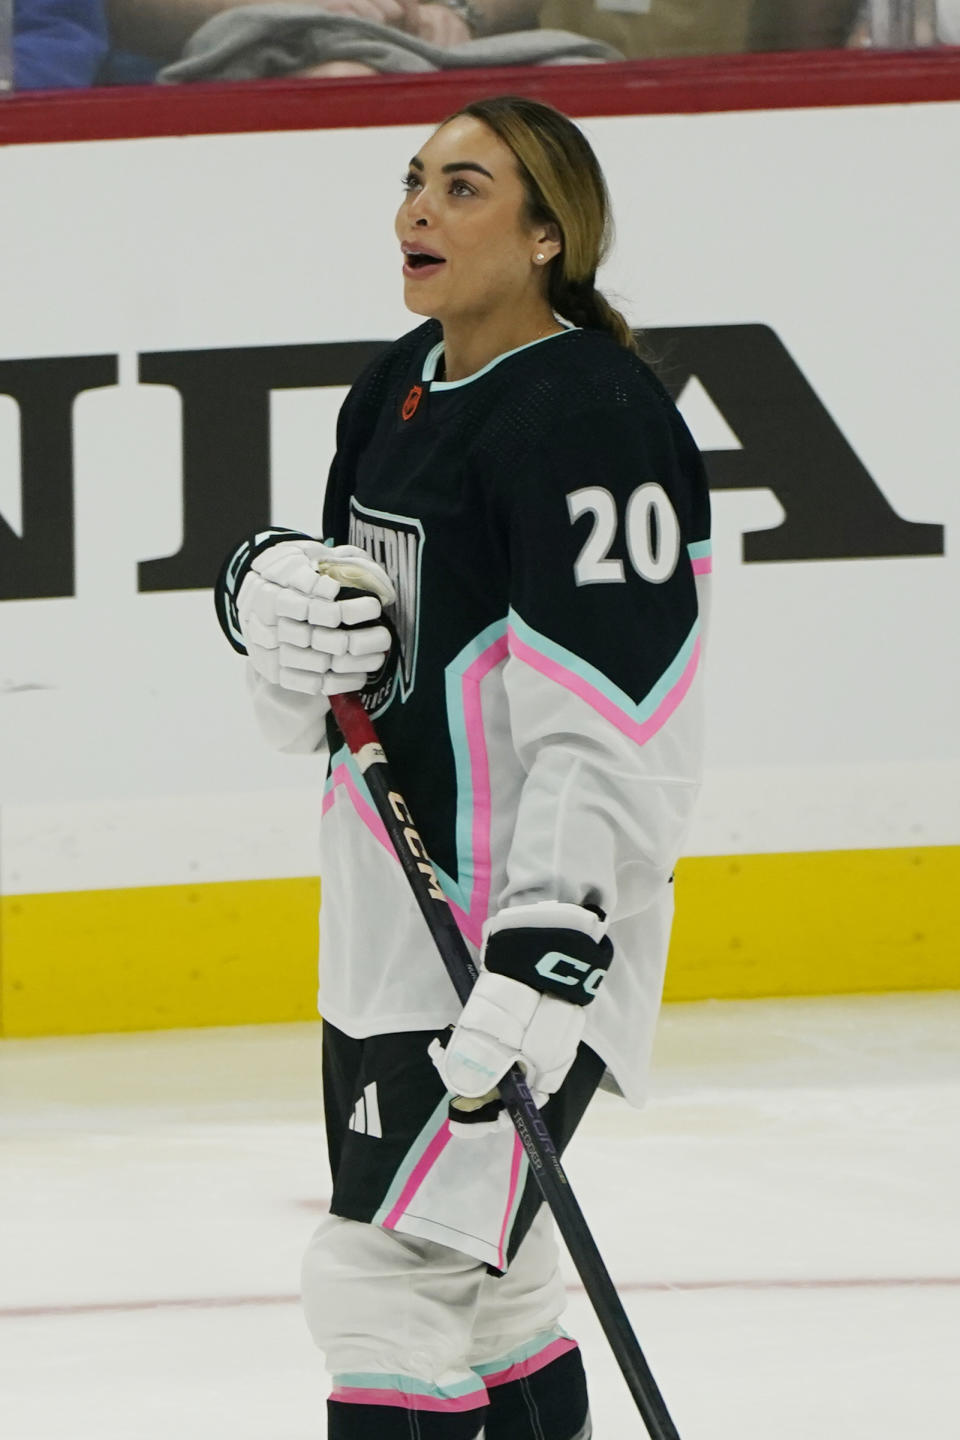 Canadian hockey player Sarah Nurse reacts after scoring a goal during the NHL All Star Skills Showcase, Friday, Feb. 3, 2023, in Sunrise, Fla. (AP Photo/Marta Lavandier)